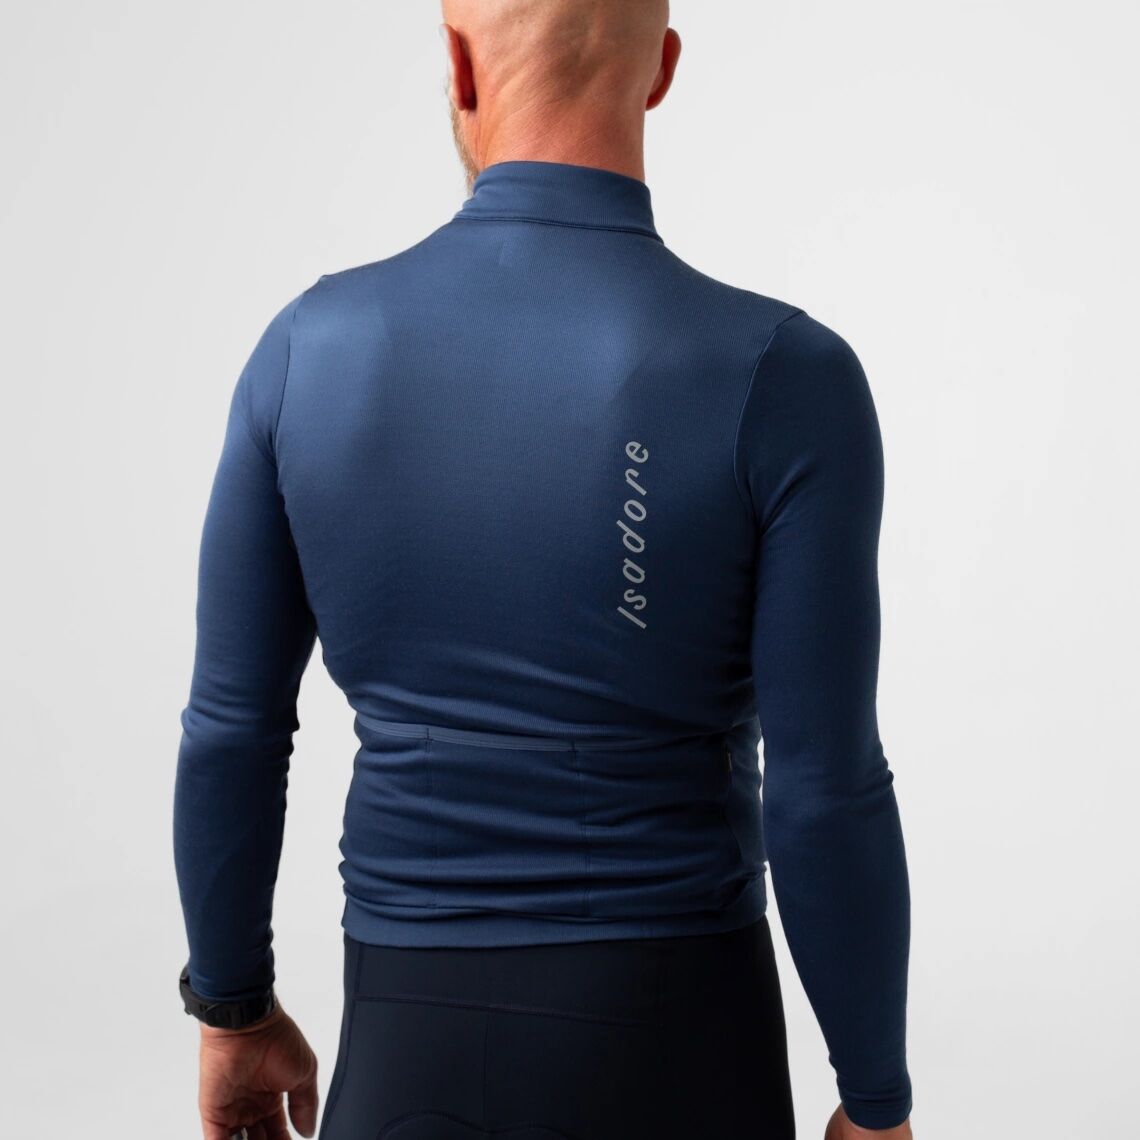 [Men] - isadore - Signature Thermal Long Sleeve Jersey [Indigo Blue]